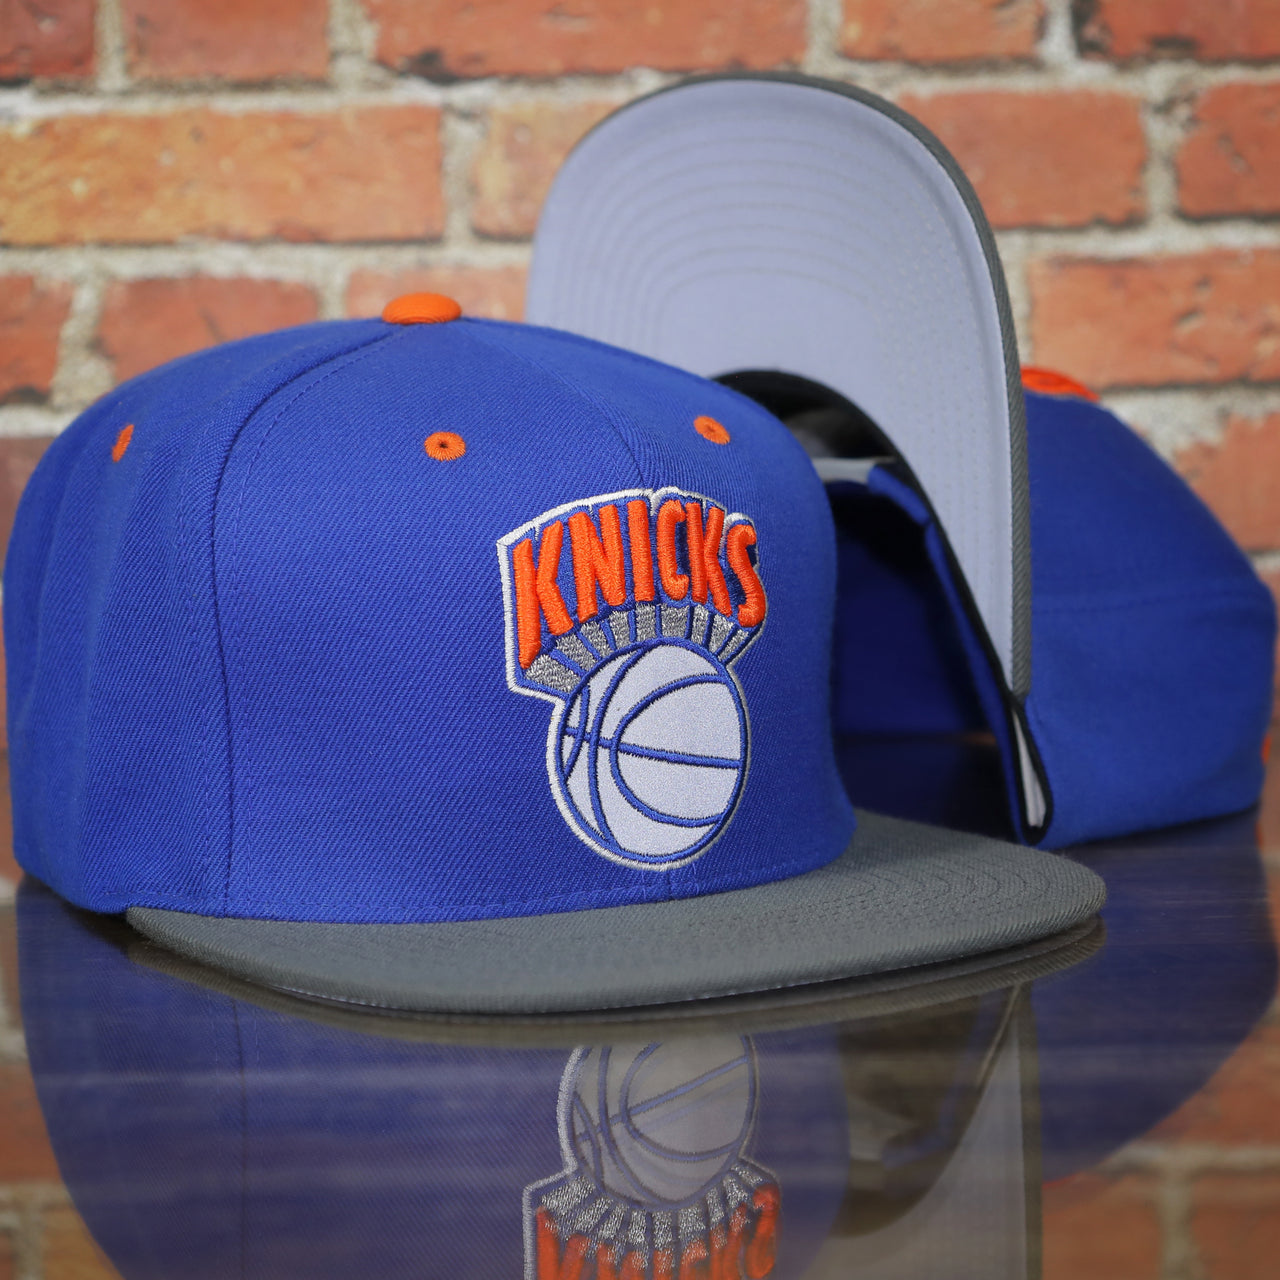 Knicks Gray Bottom Snapback | New York Knicks Retro Grey Bottom Snap Cap